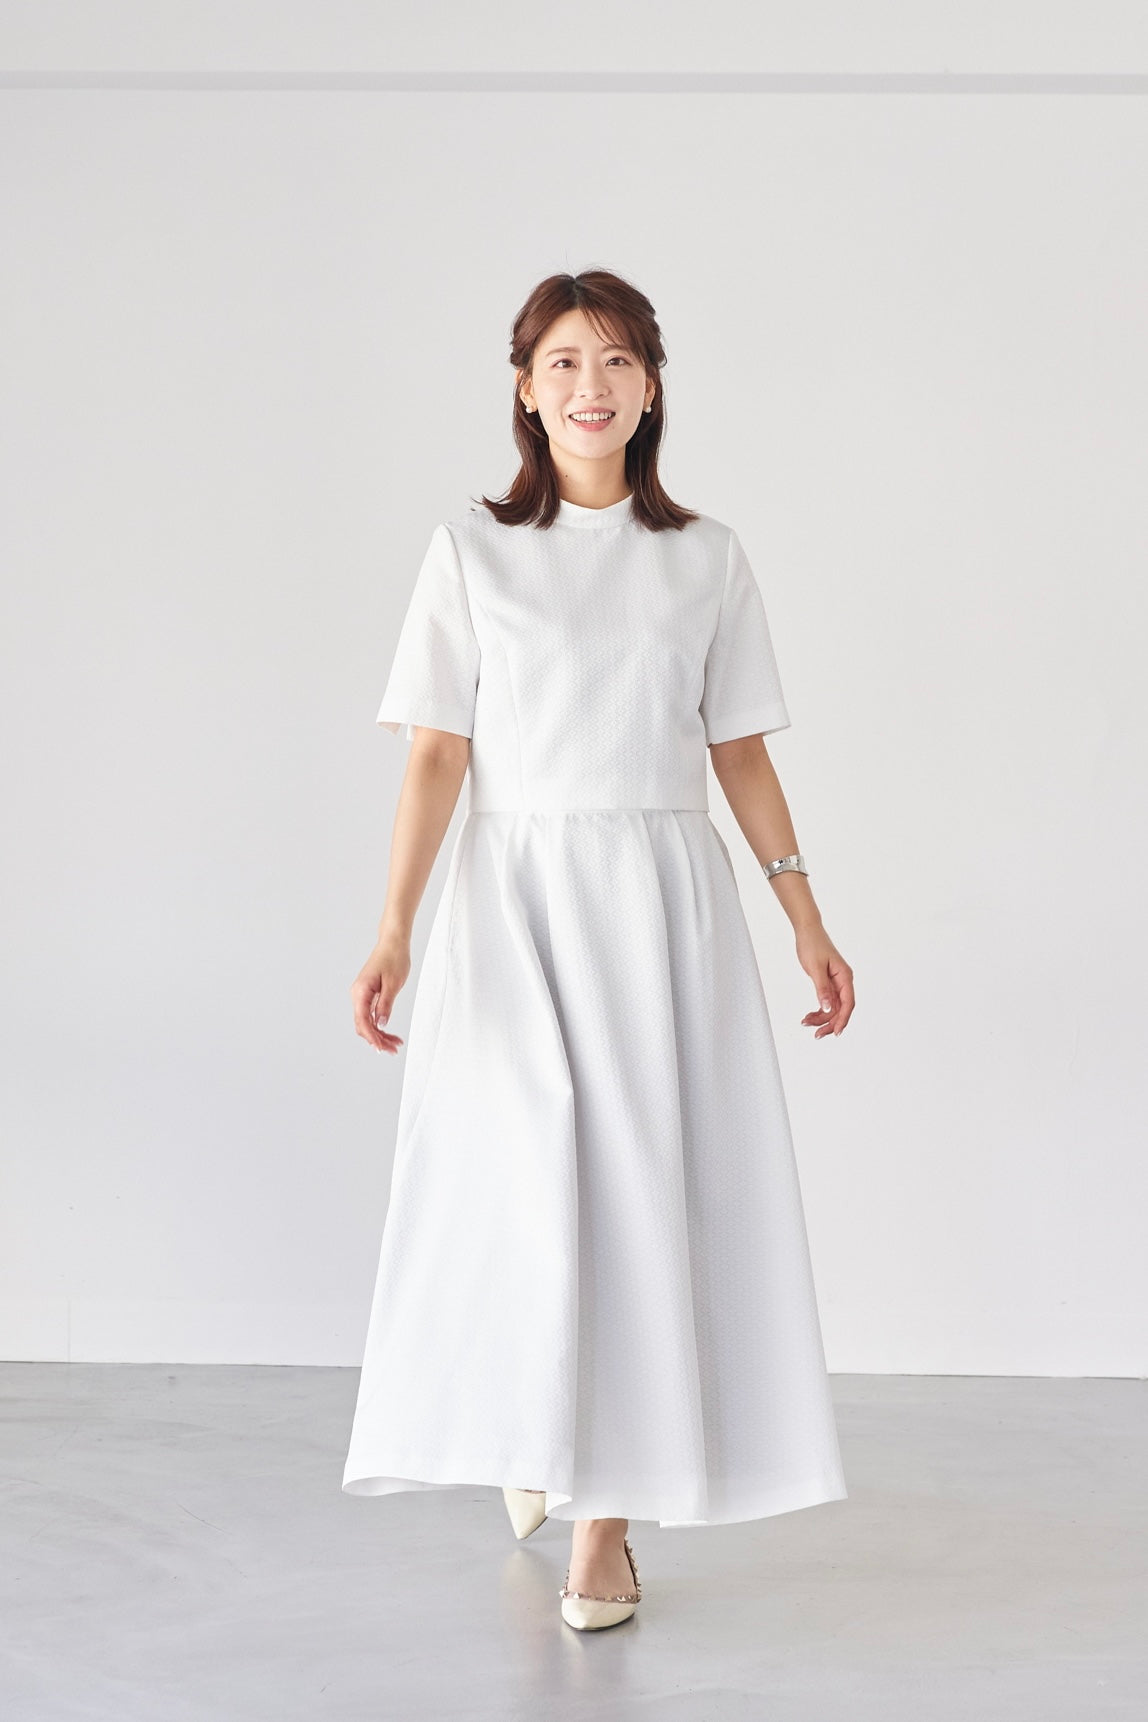 Blooming jacquard skirt(White) – Audire